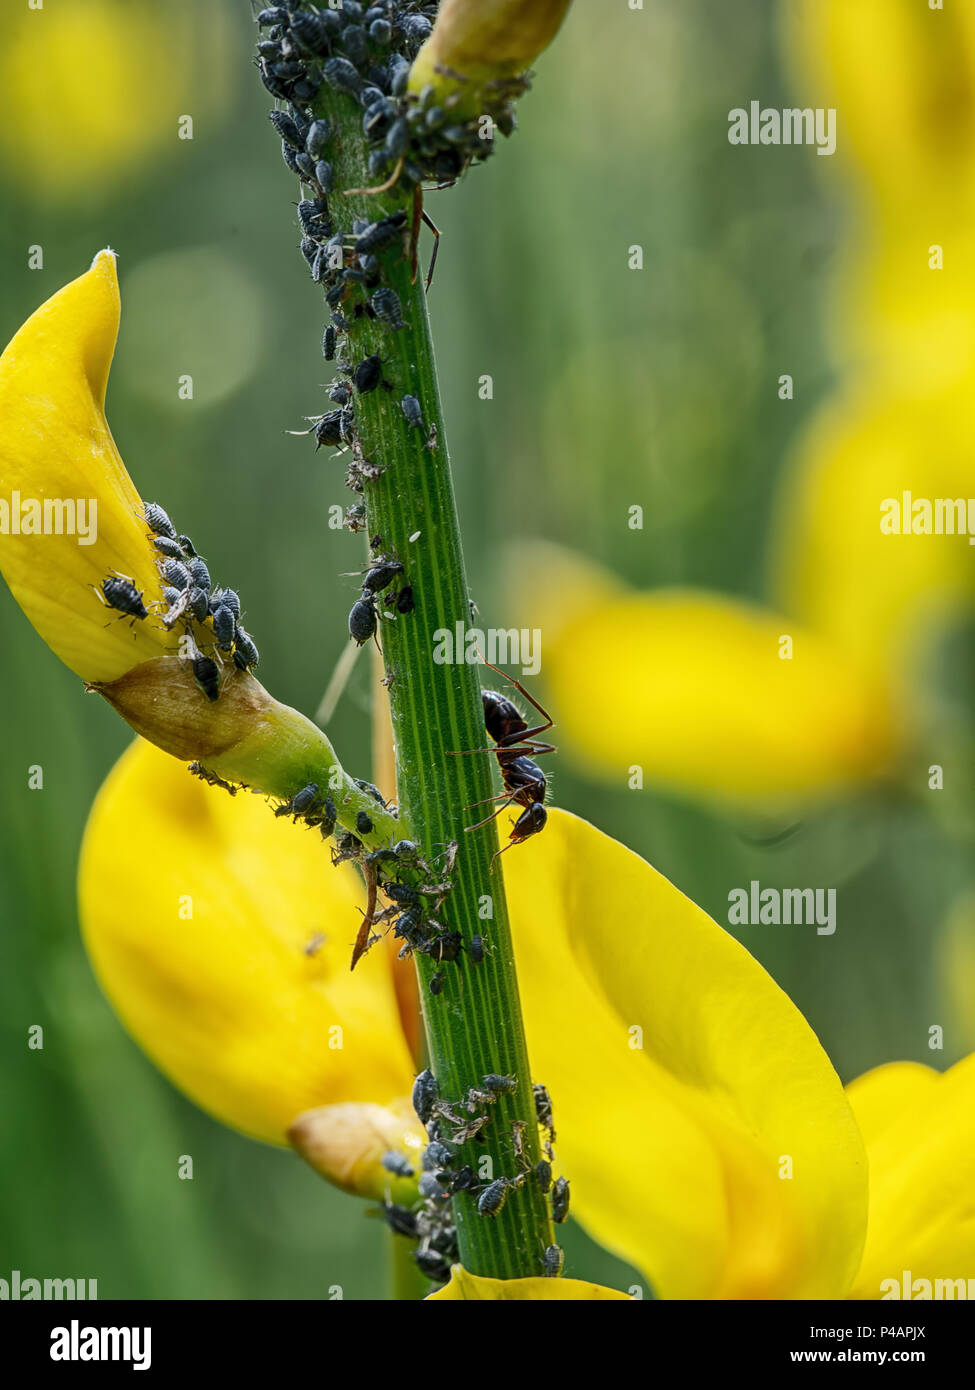 Ants and blackfly on common broom plant.  Macro. Stock Photo